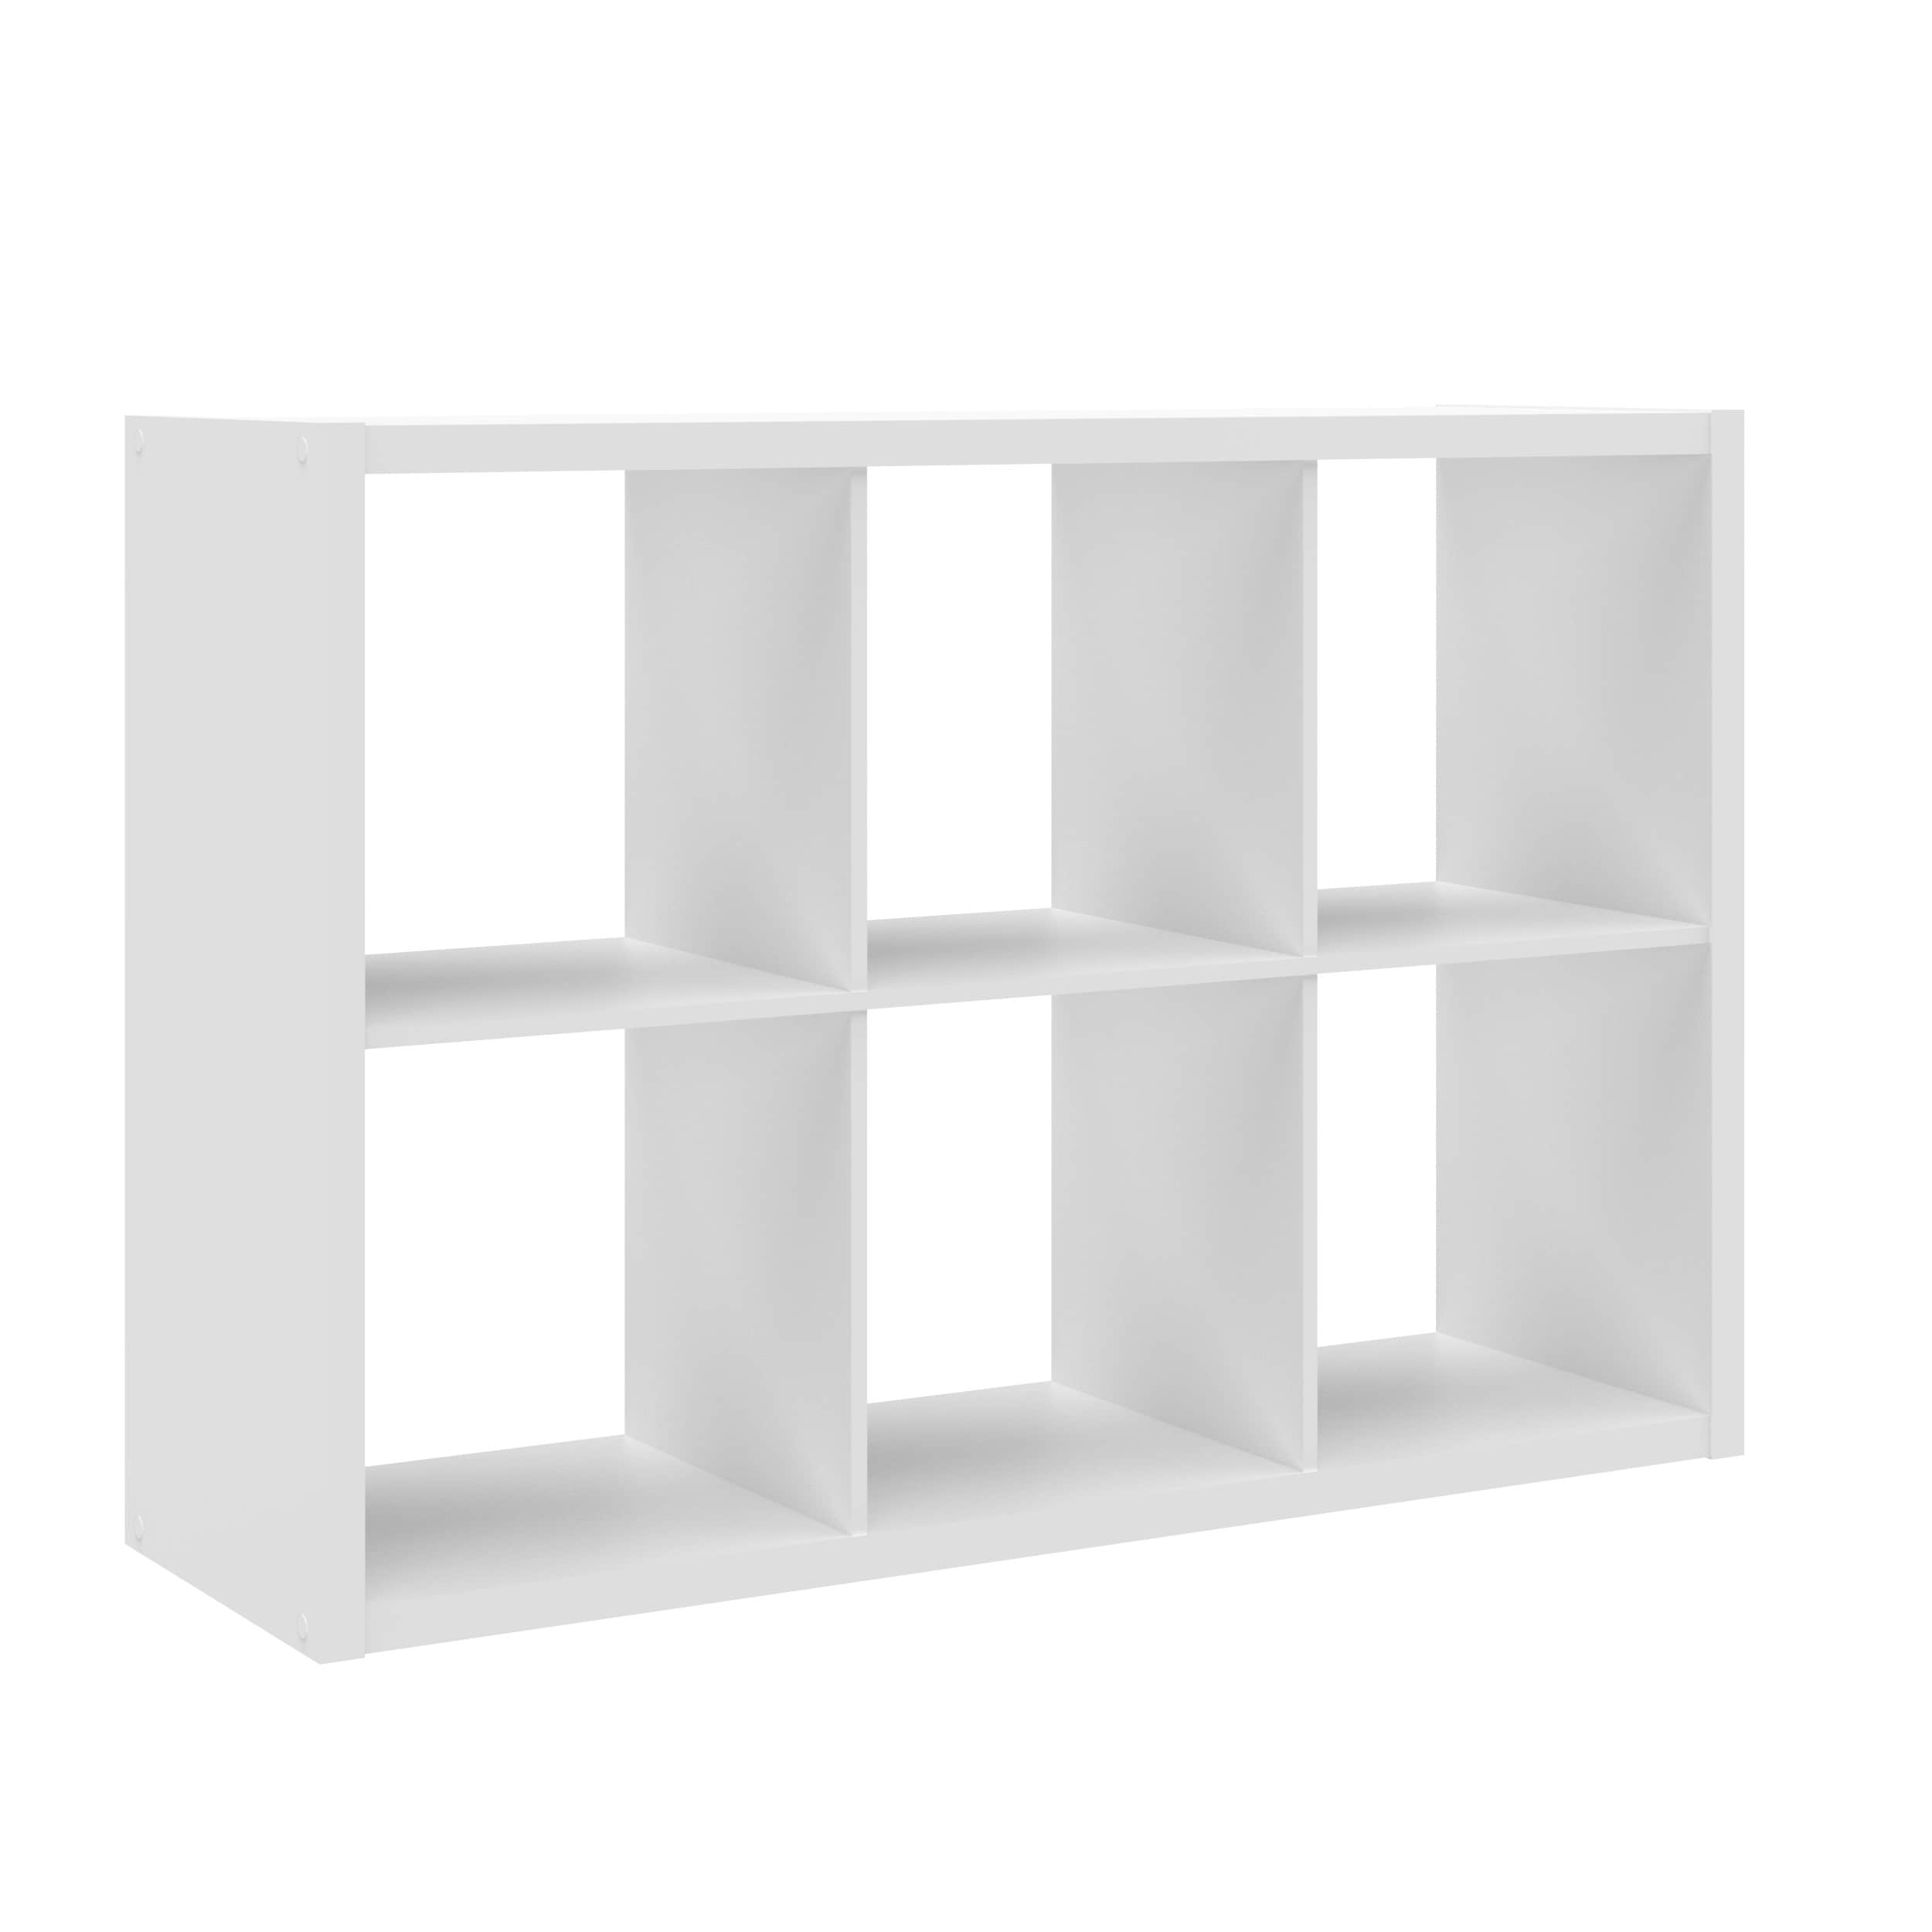 Details about   8/6 Cube Storage Unit Cubby Organizer Shelf Rack Cabinet Shelves Furniture Home 